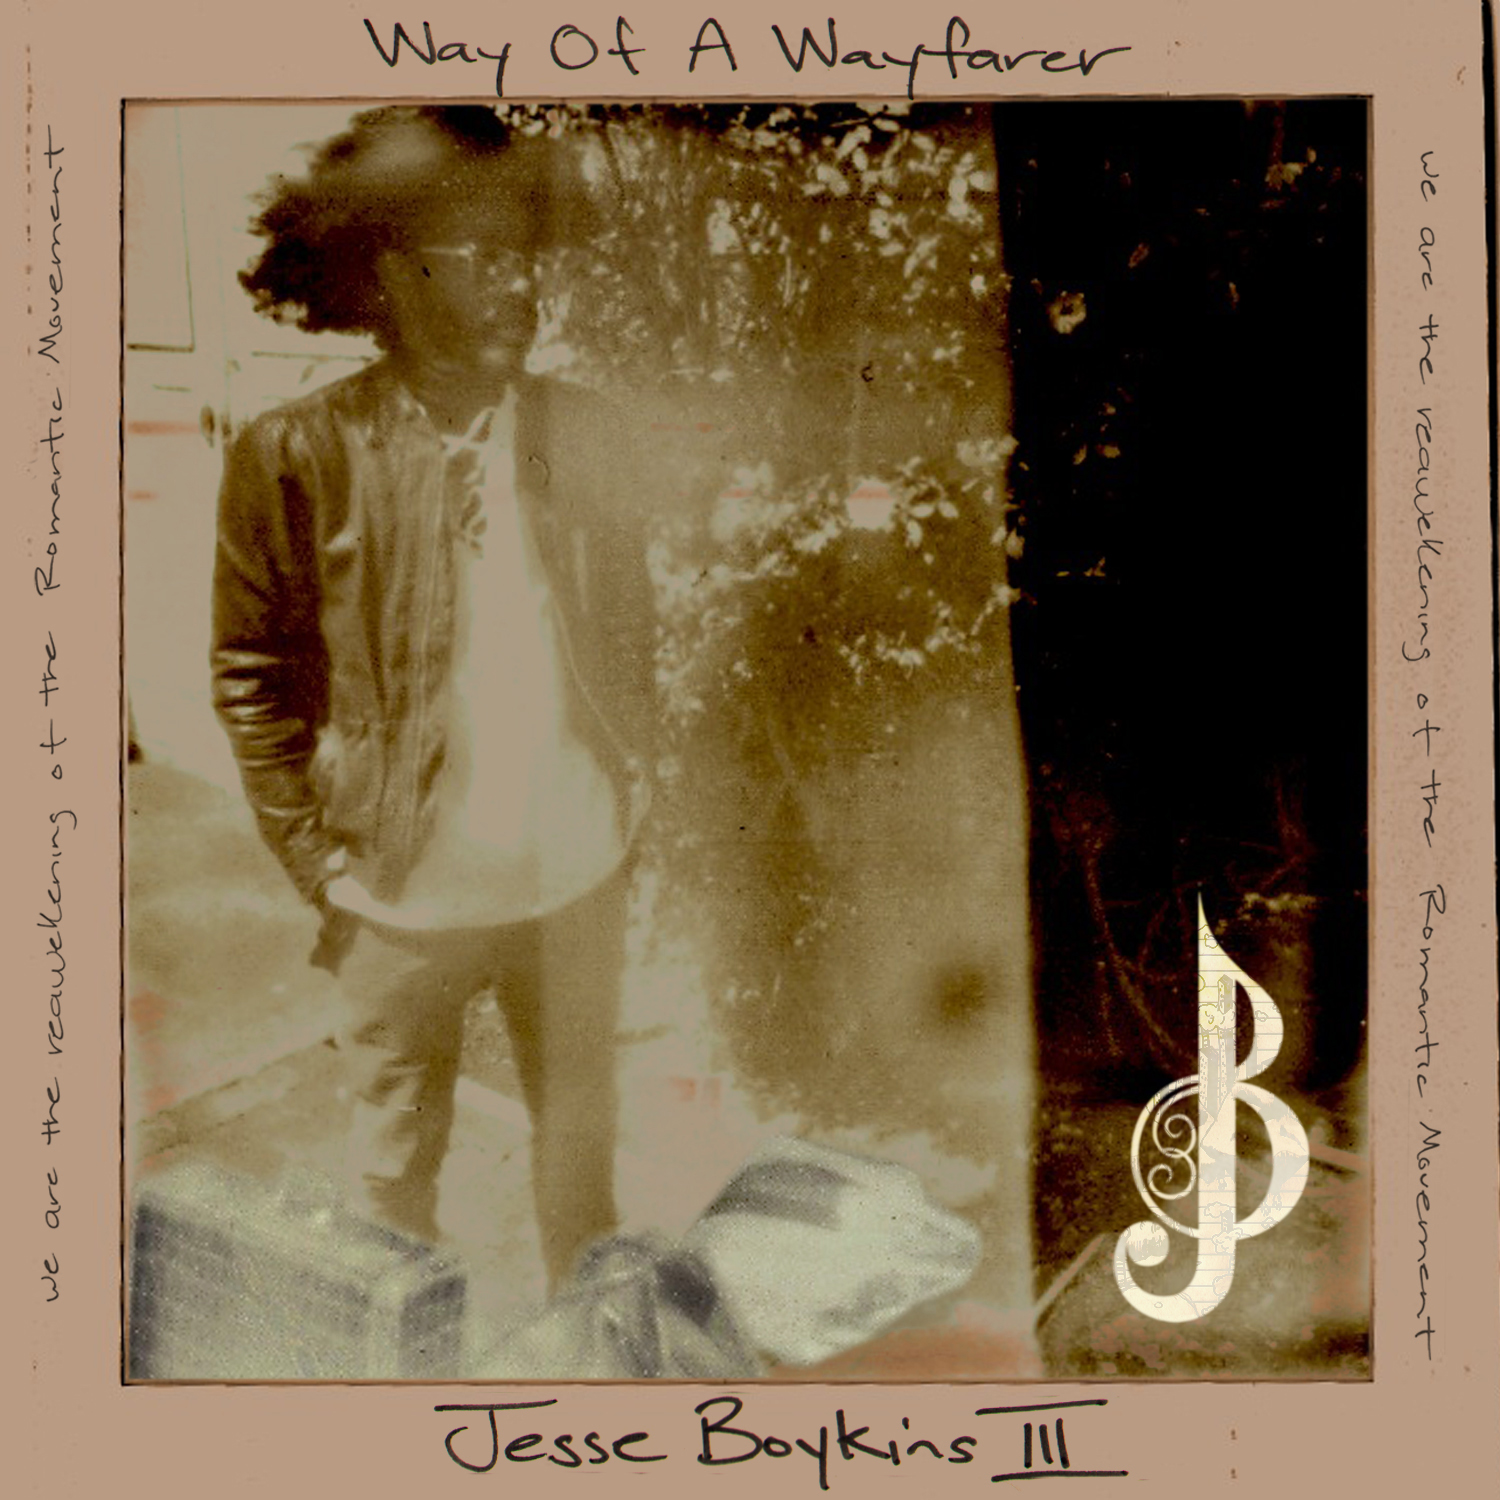 Jesse Boykins III Releases "Way of a Wayfarer" EP